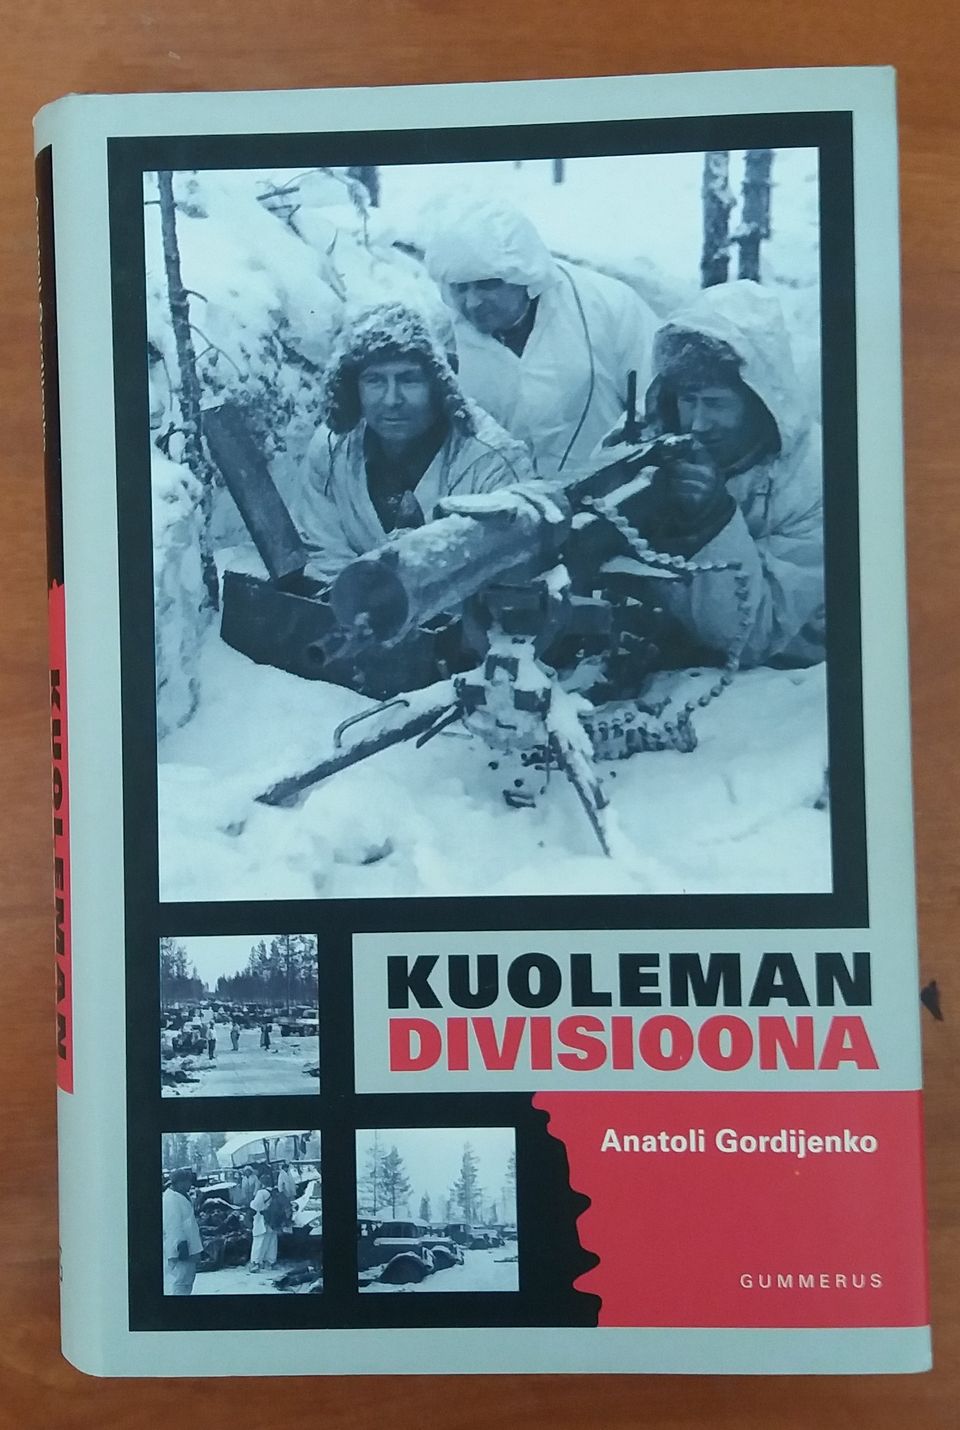 Anatoli Gordijenko KUOLEMAN DIVISIOONA Gummerus 2003